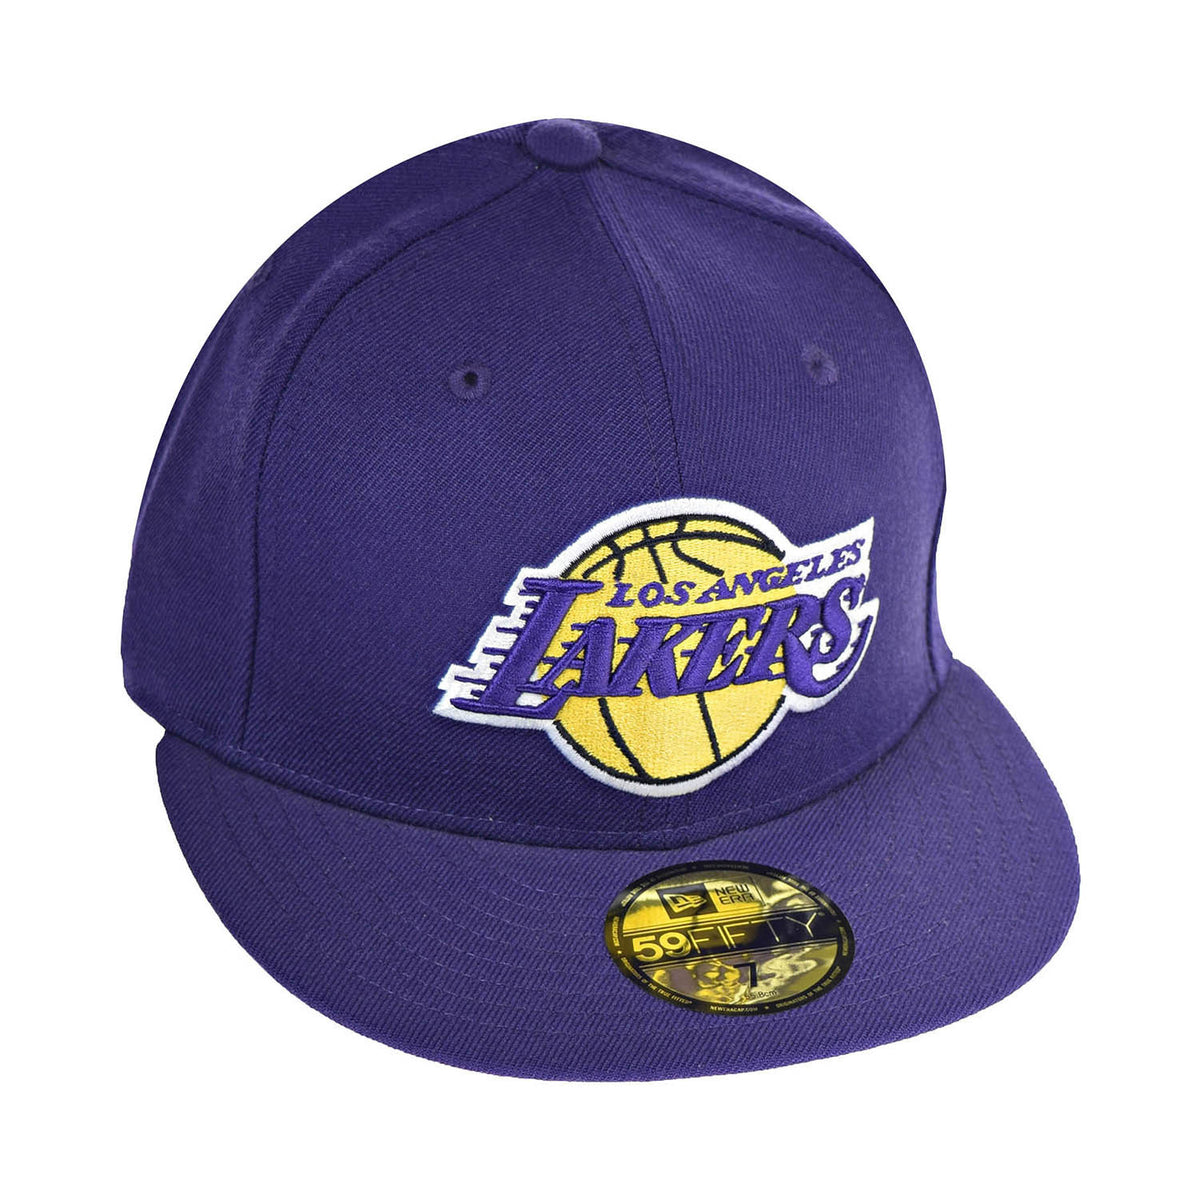 Los Angeles Lakers NBA Vizasktech 59fifty New Era yellow Cap